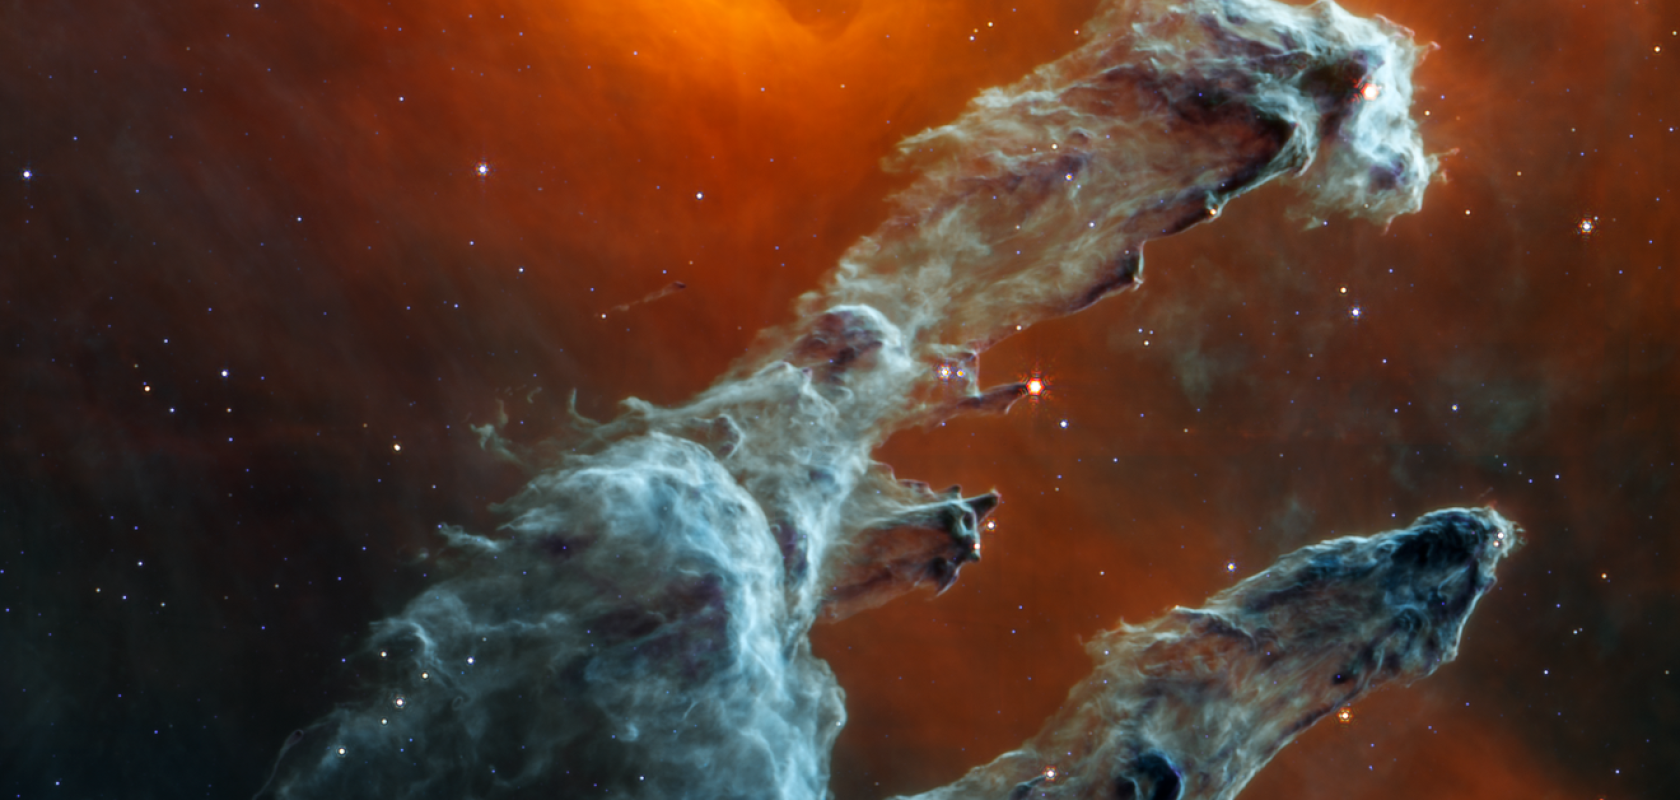 Pillars of Creation image taken by James Webb space telescope